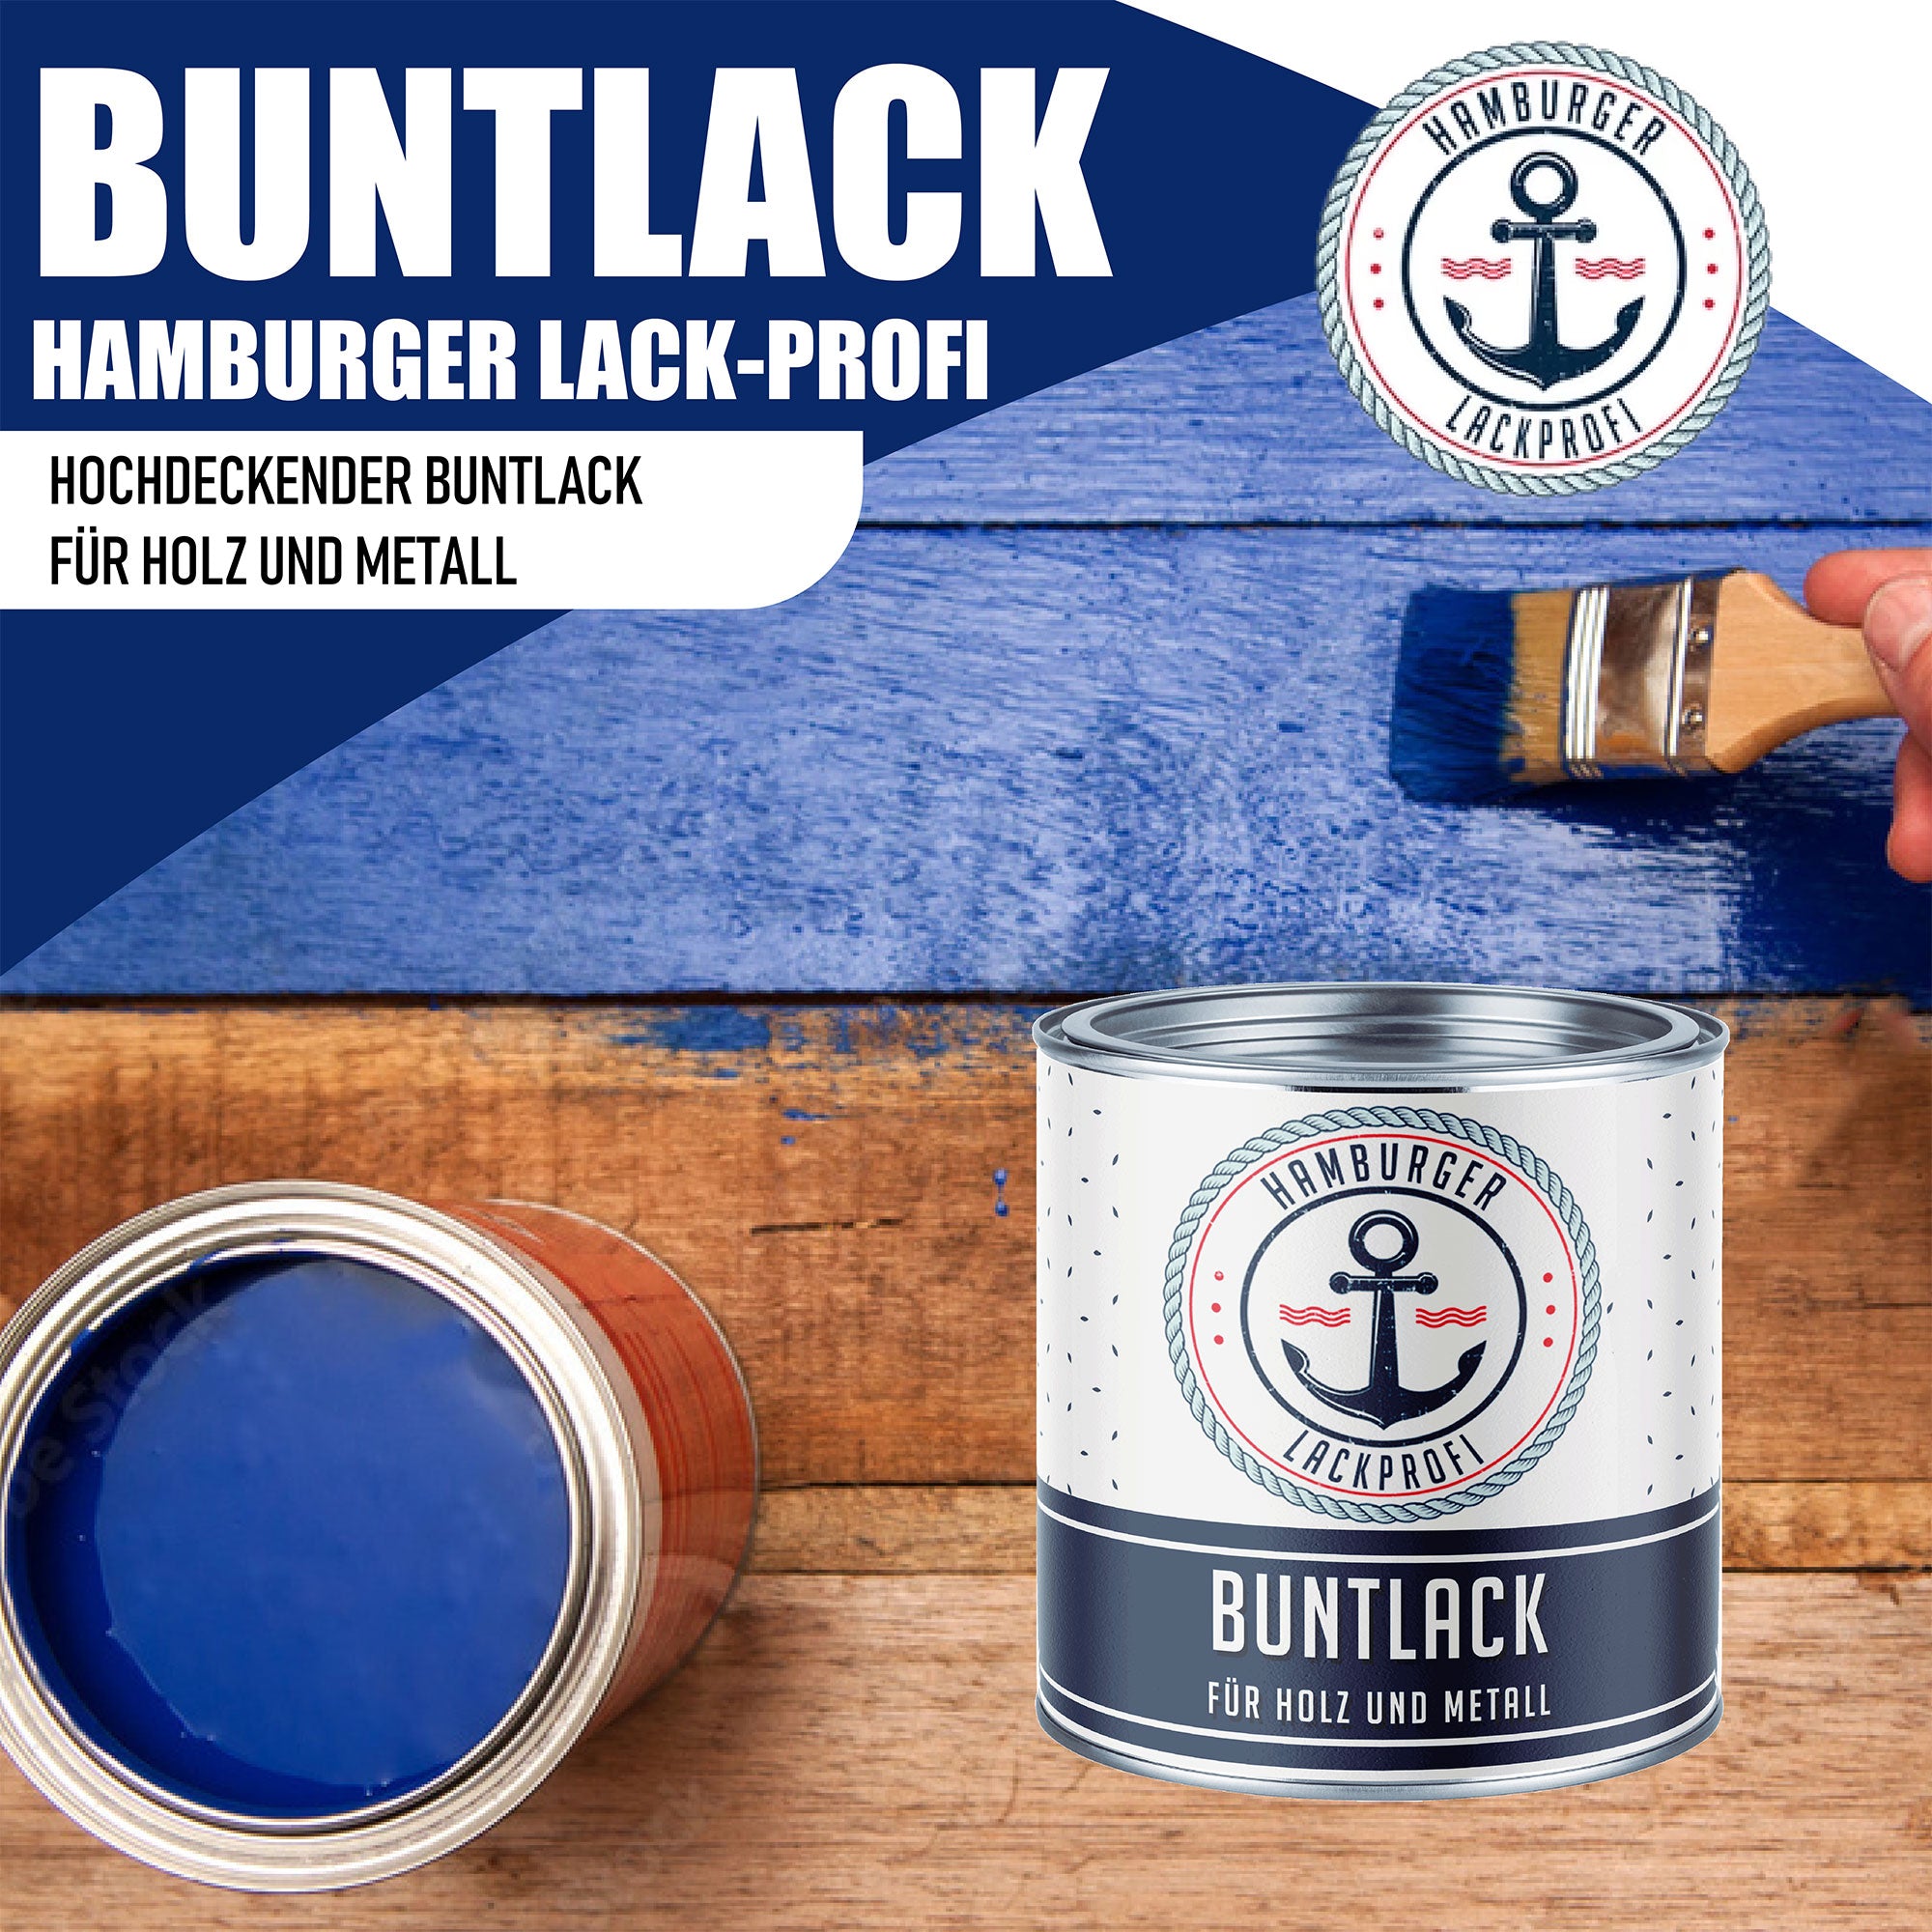 Hamburger Lack-Profi Buntlack in Maisgelb RAL 1006 mit Lackierset (X300) & Verdünnung (1 L) - 30% Sparangebot